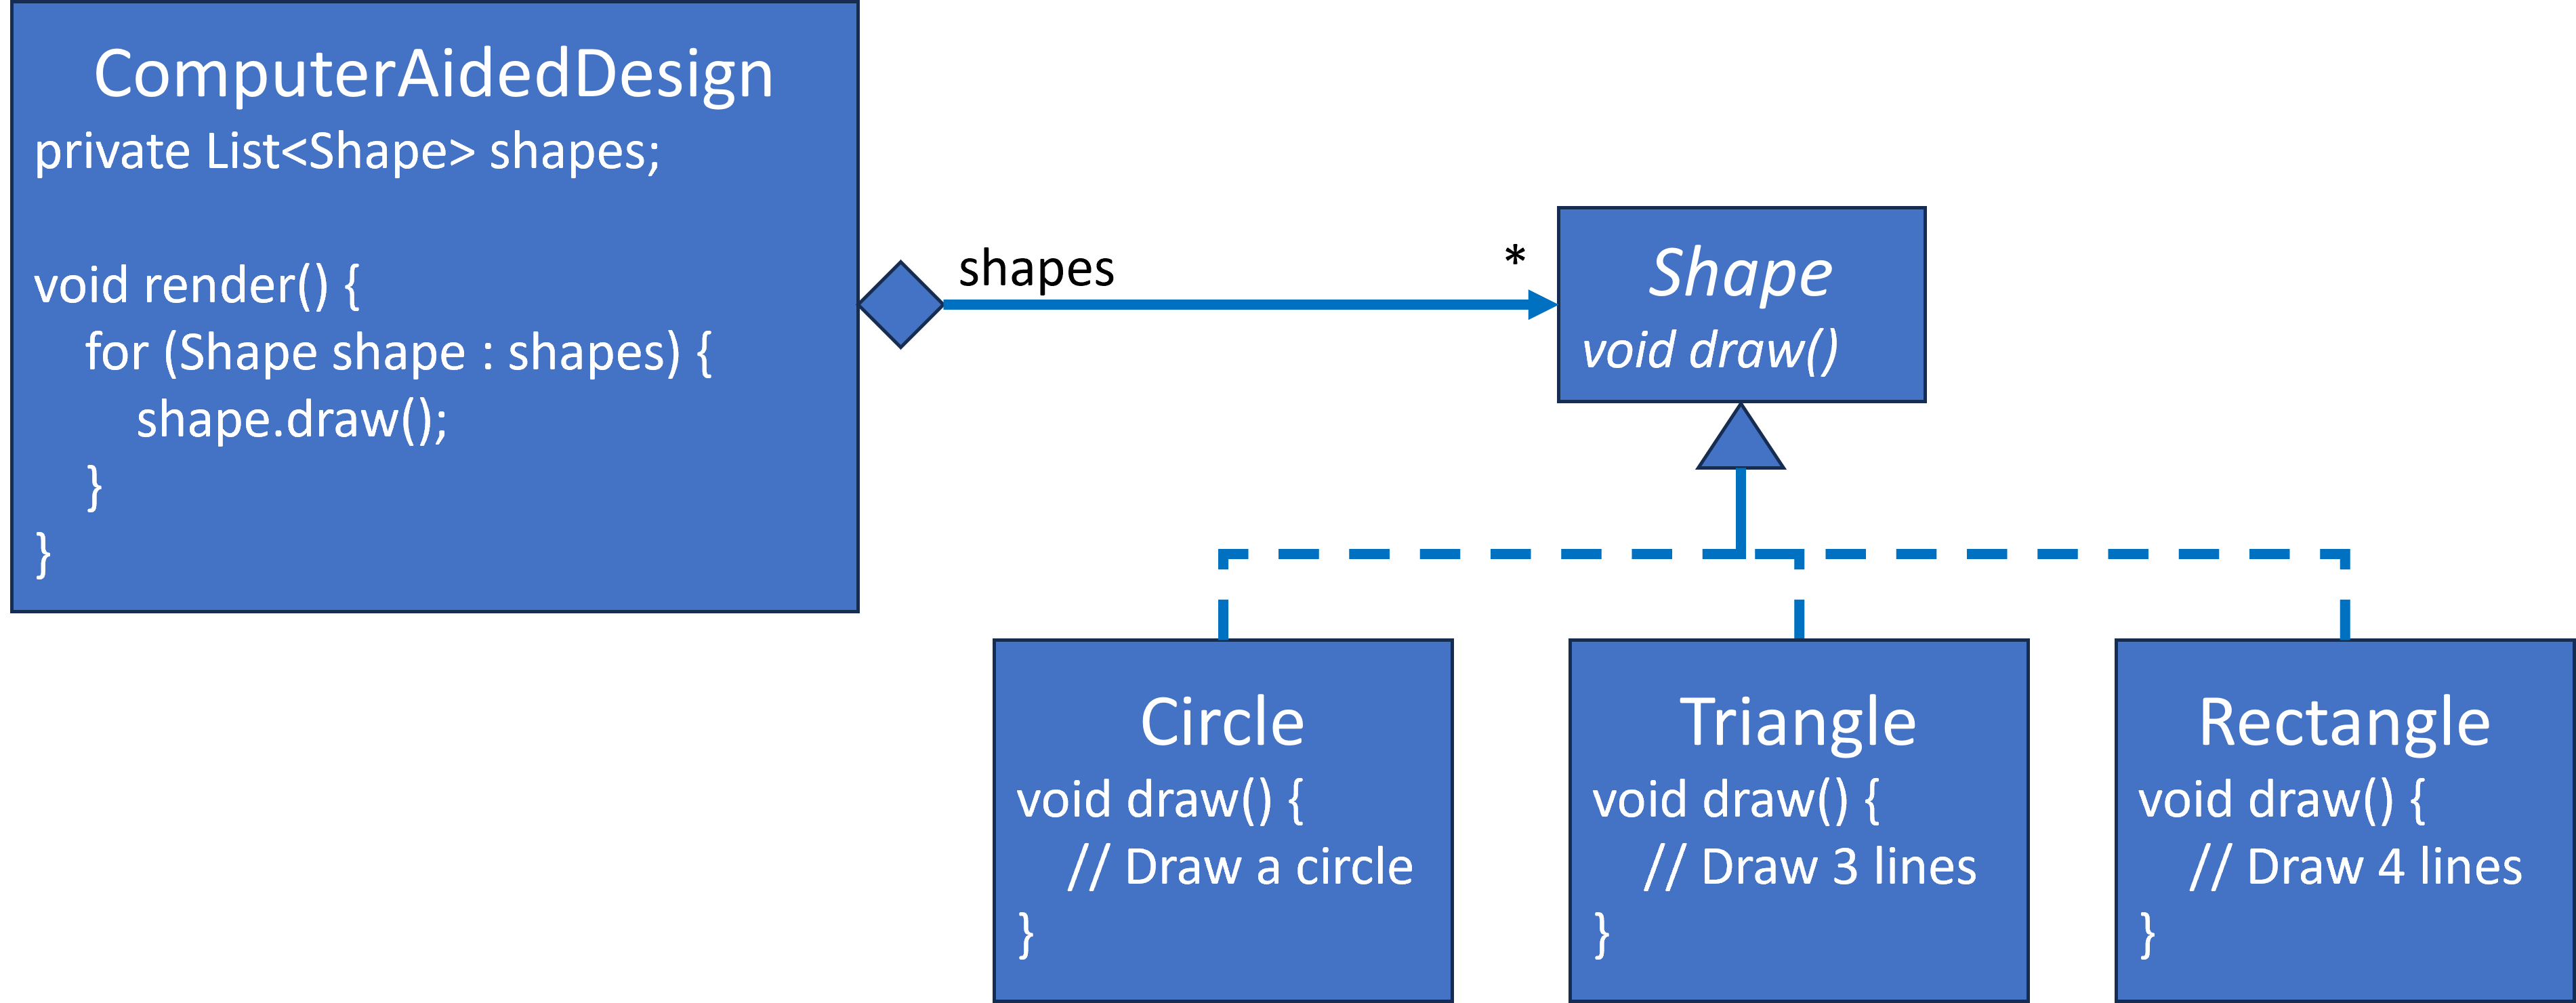 Shapes UML Class Diagram